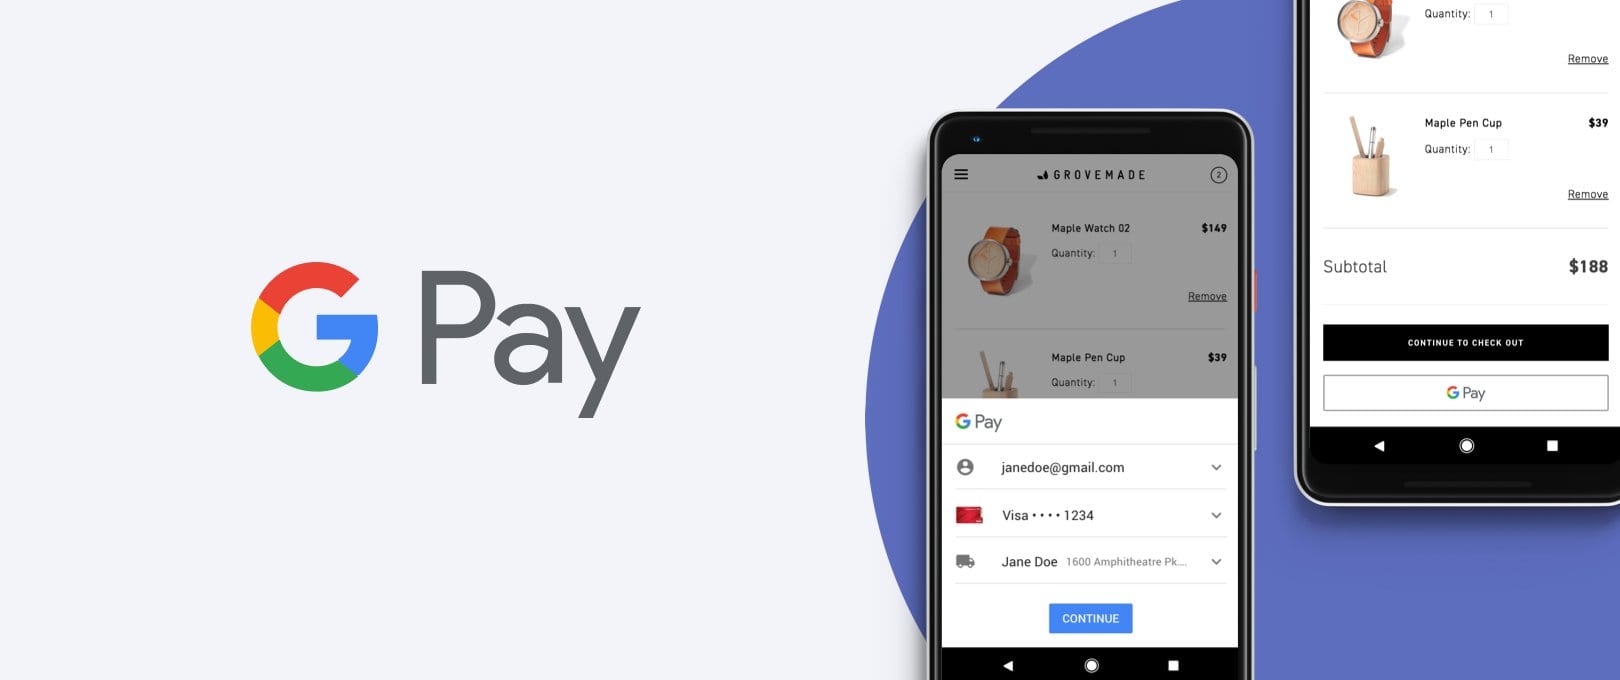 google-pay-integration.jpg